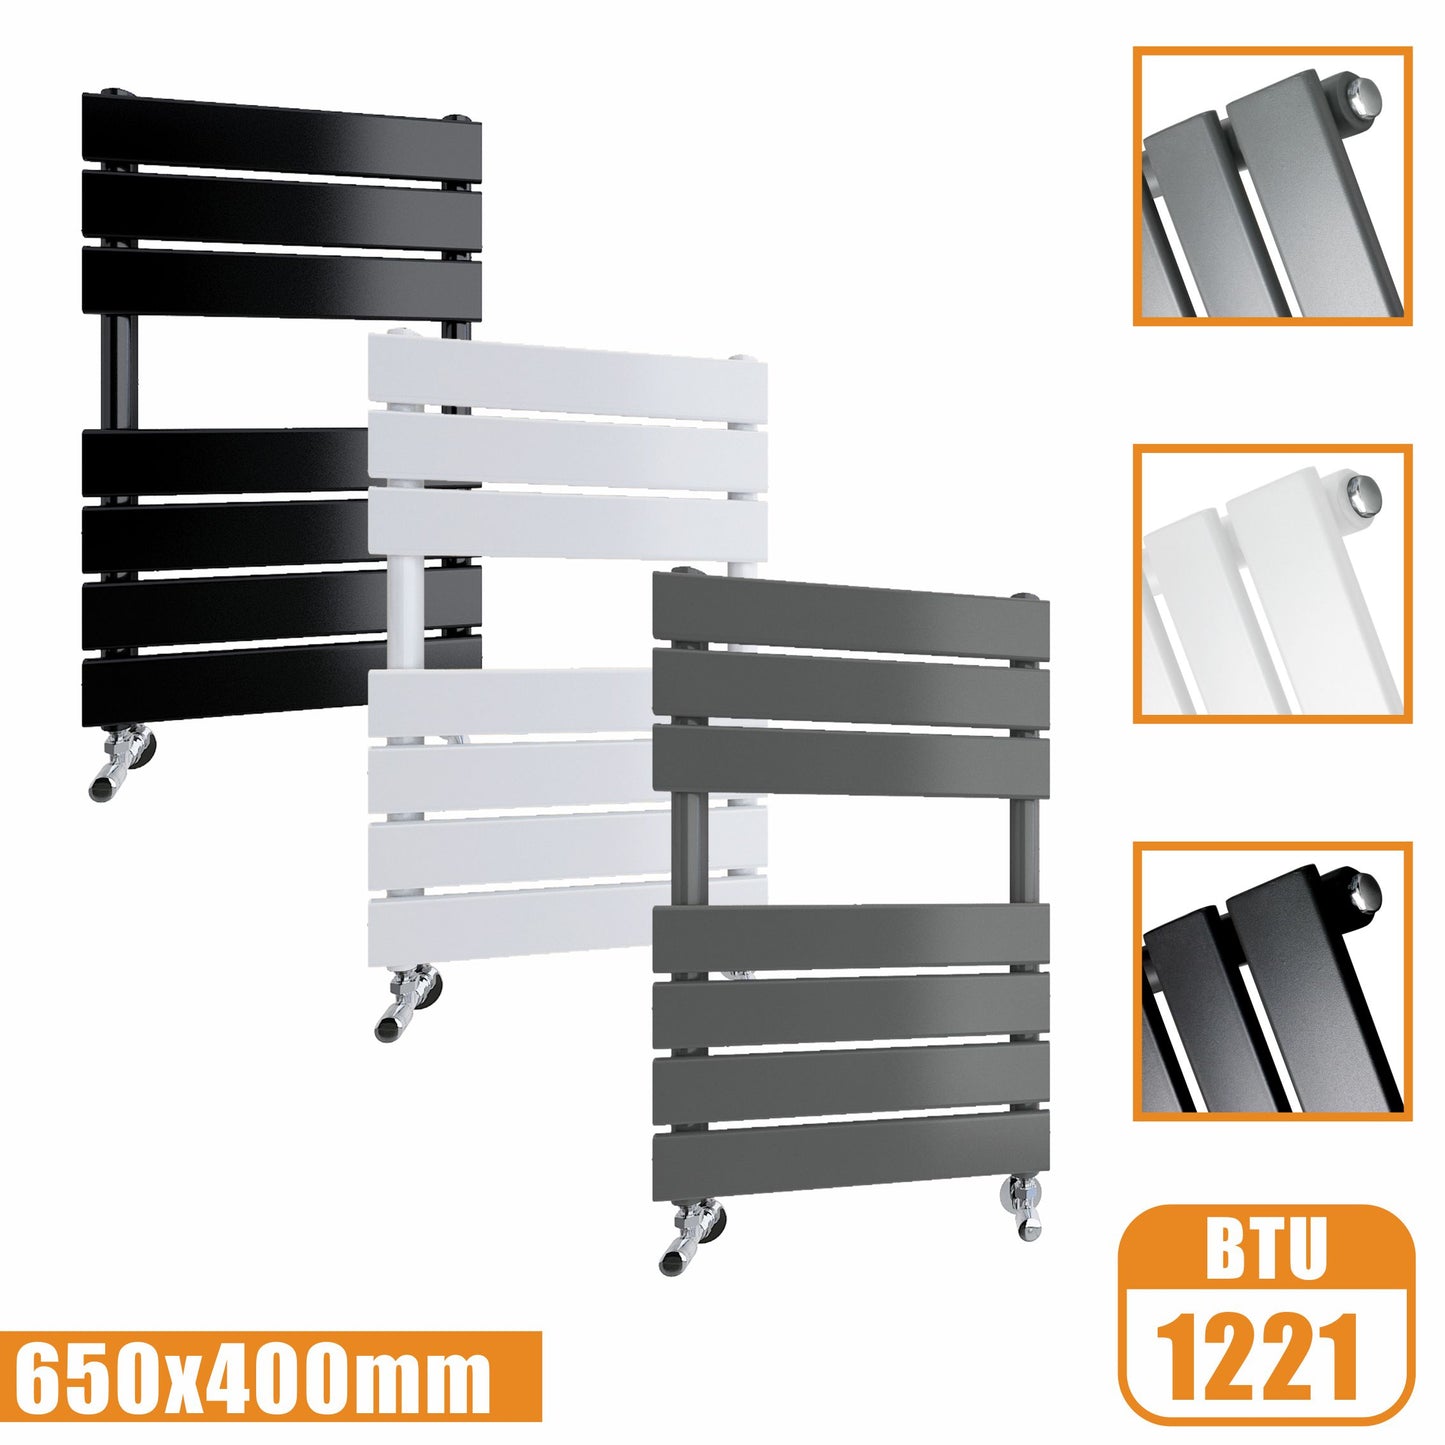 Flat Panel Heated Towel Rail ladder Radiator Anthracite White Black 650x400MM AICA